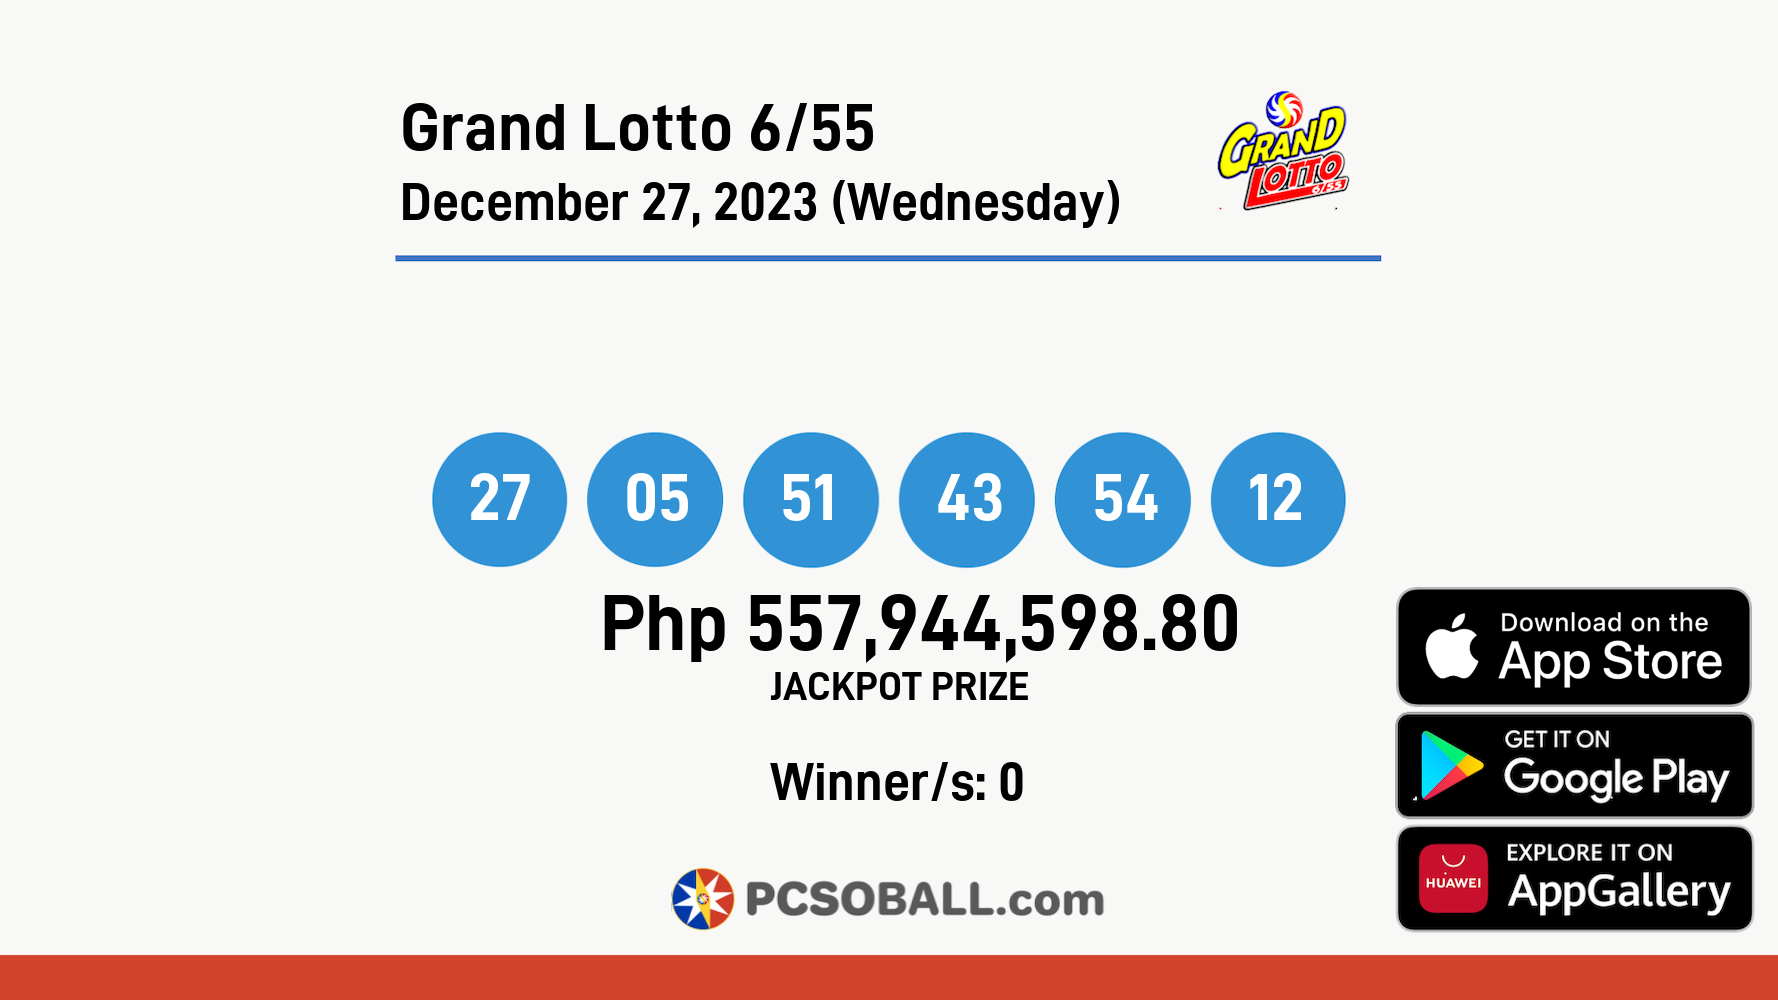 Grand Lotto 6/55 December 27, 2023 (Wednesday) Result